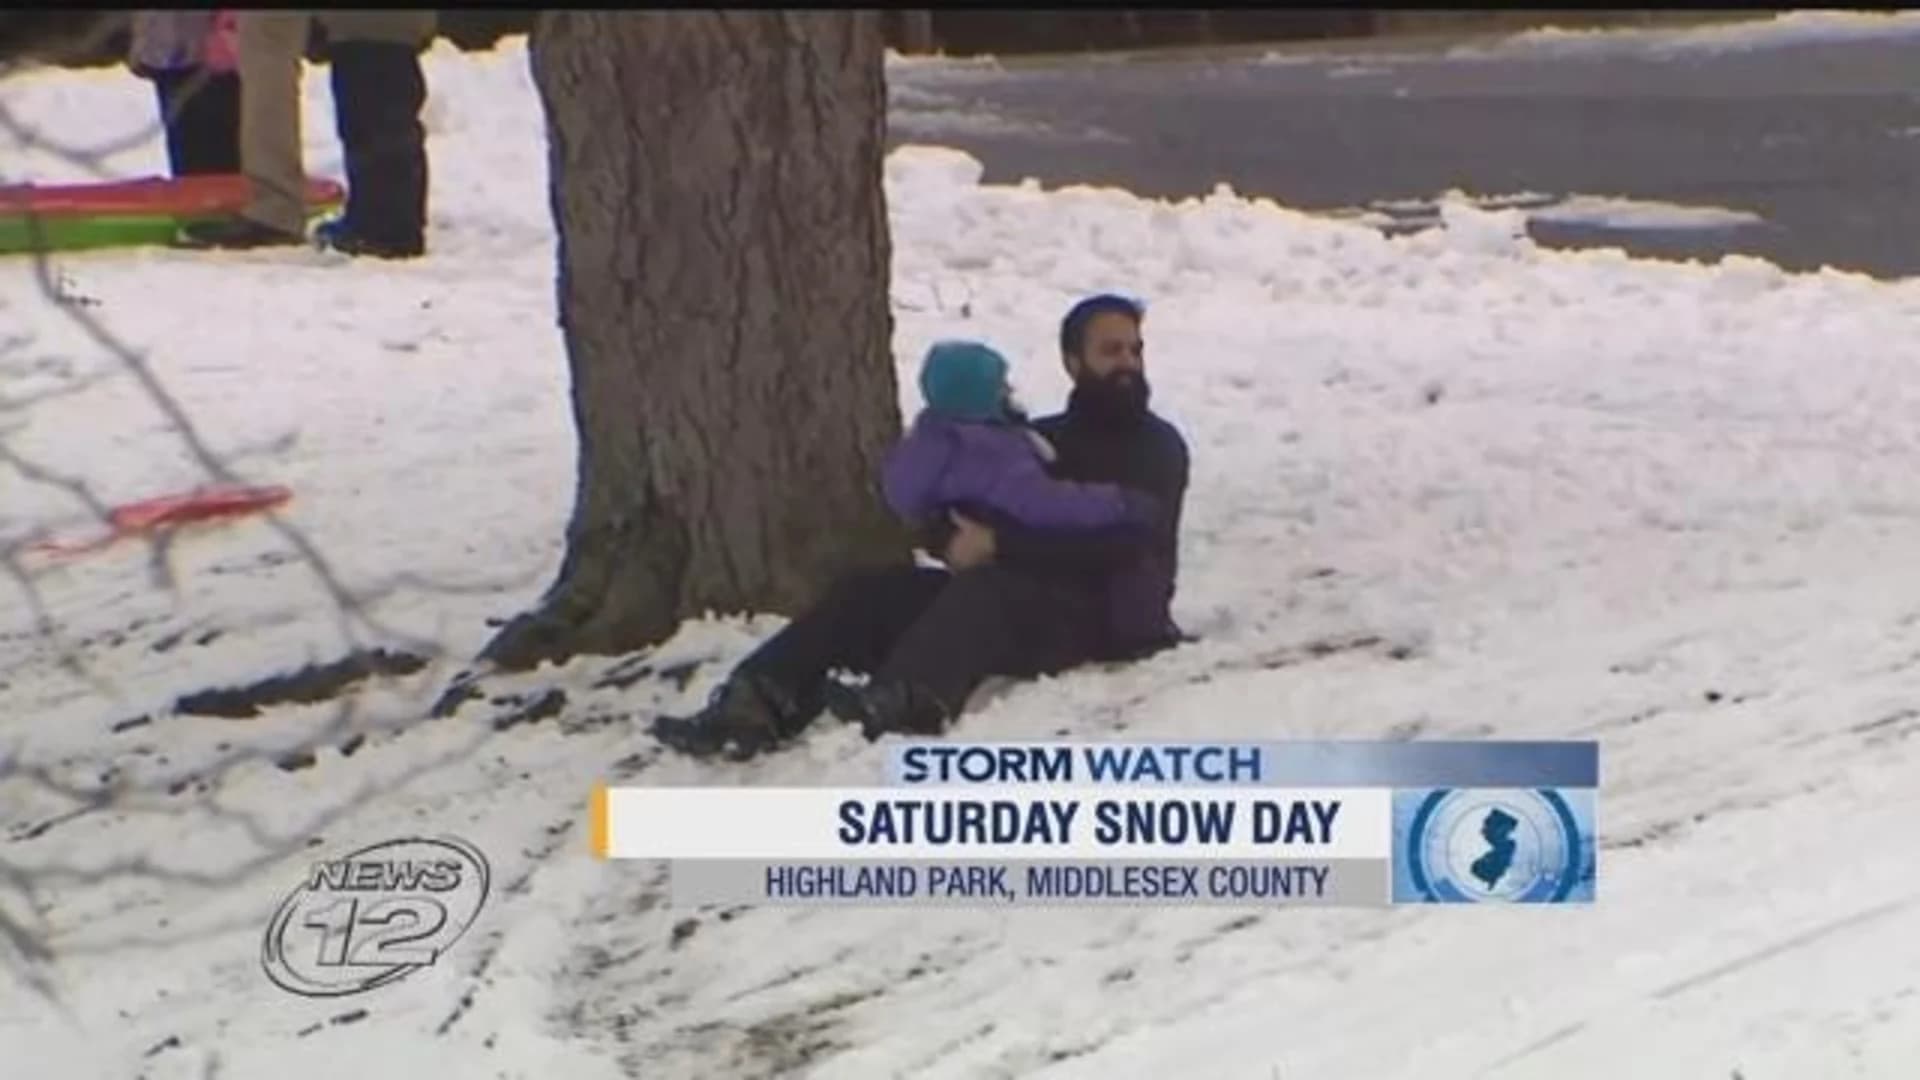 Sledders revel in weekend snow across NJ